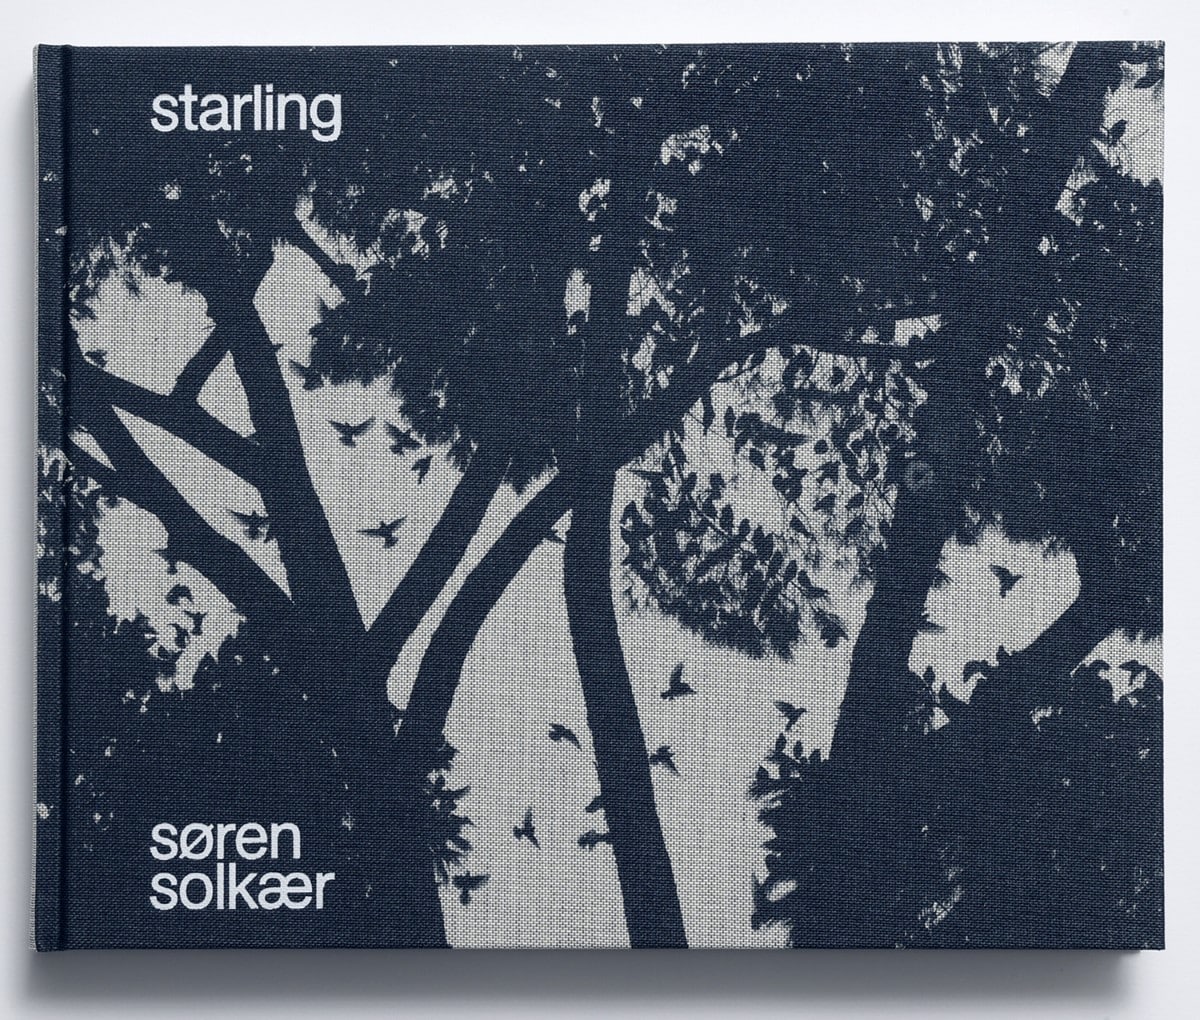 Starling by Søren Solkær